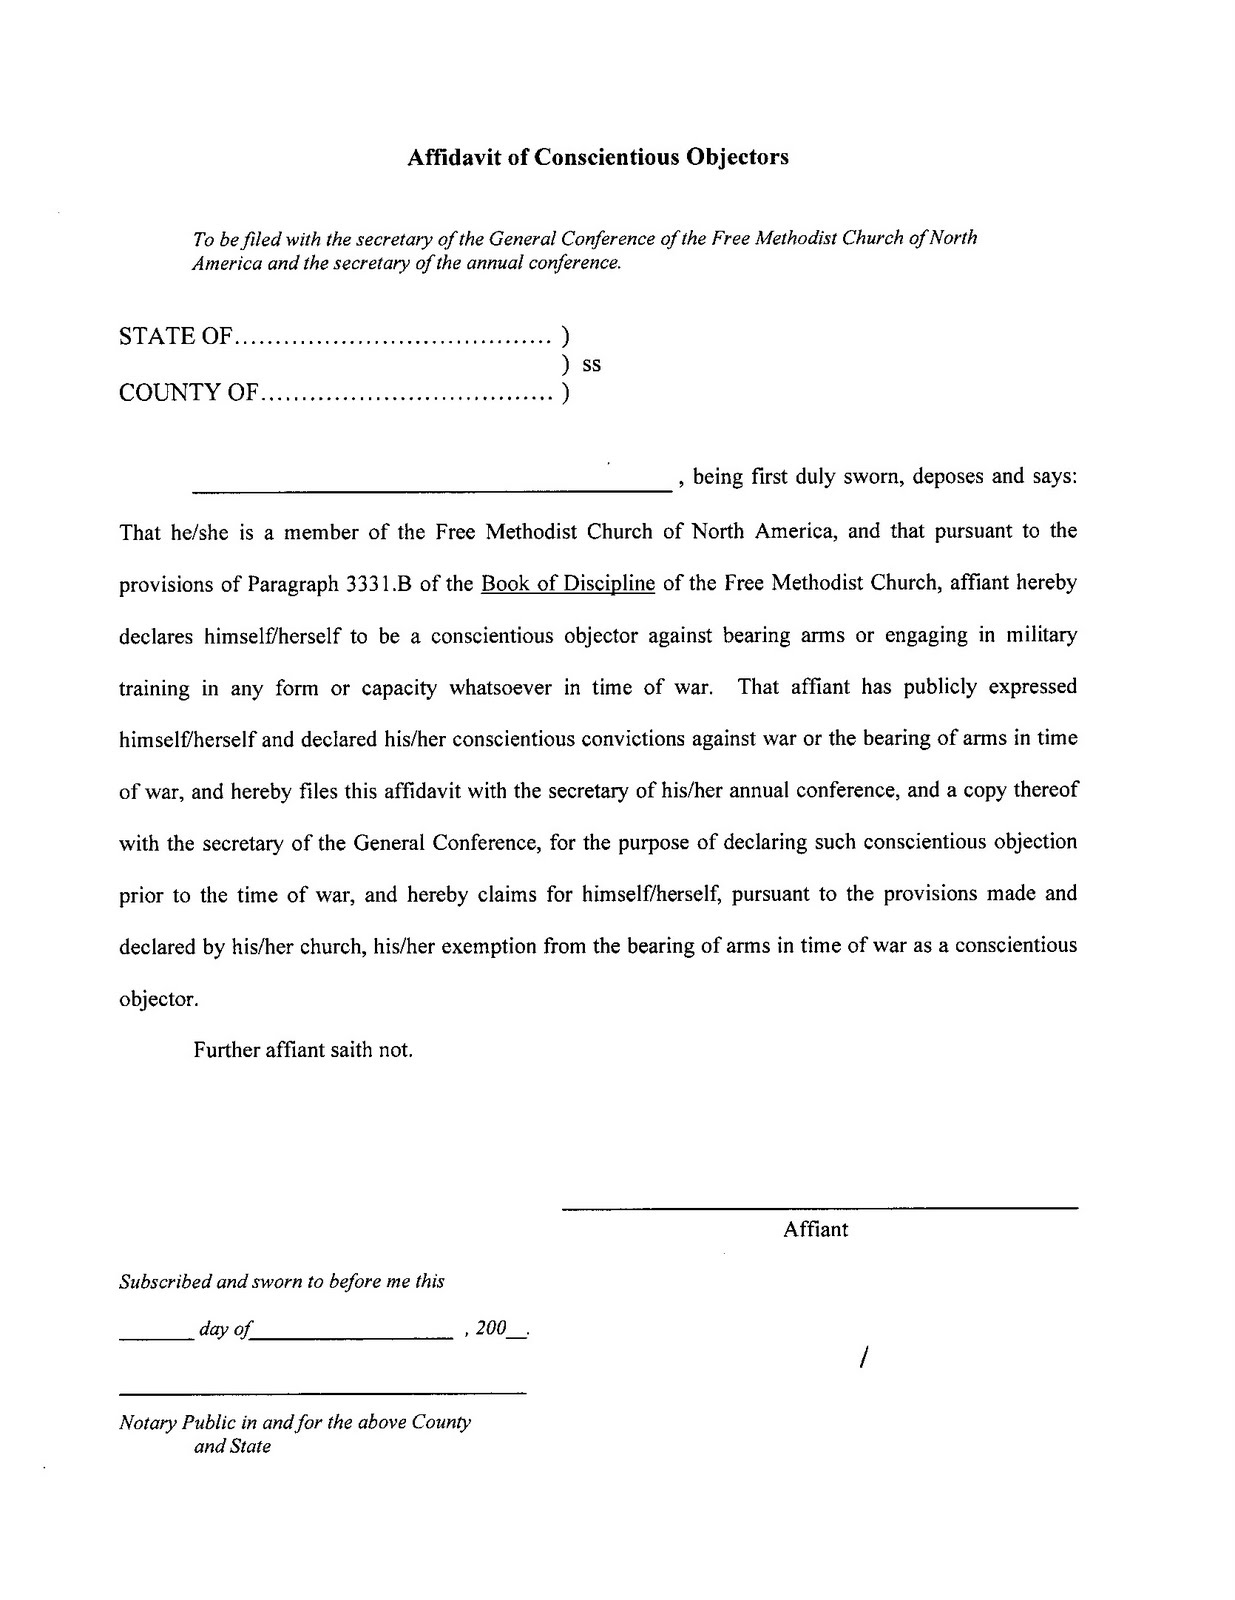 Affidavit of Conscience Objection